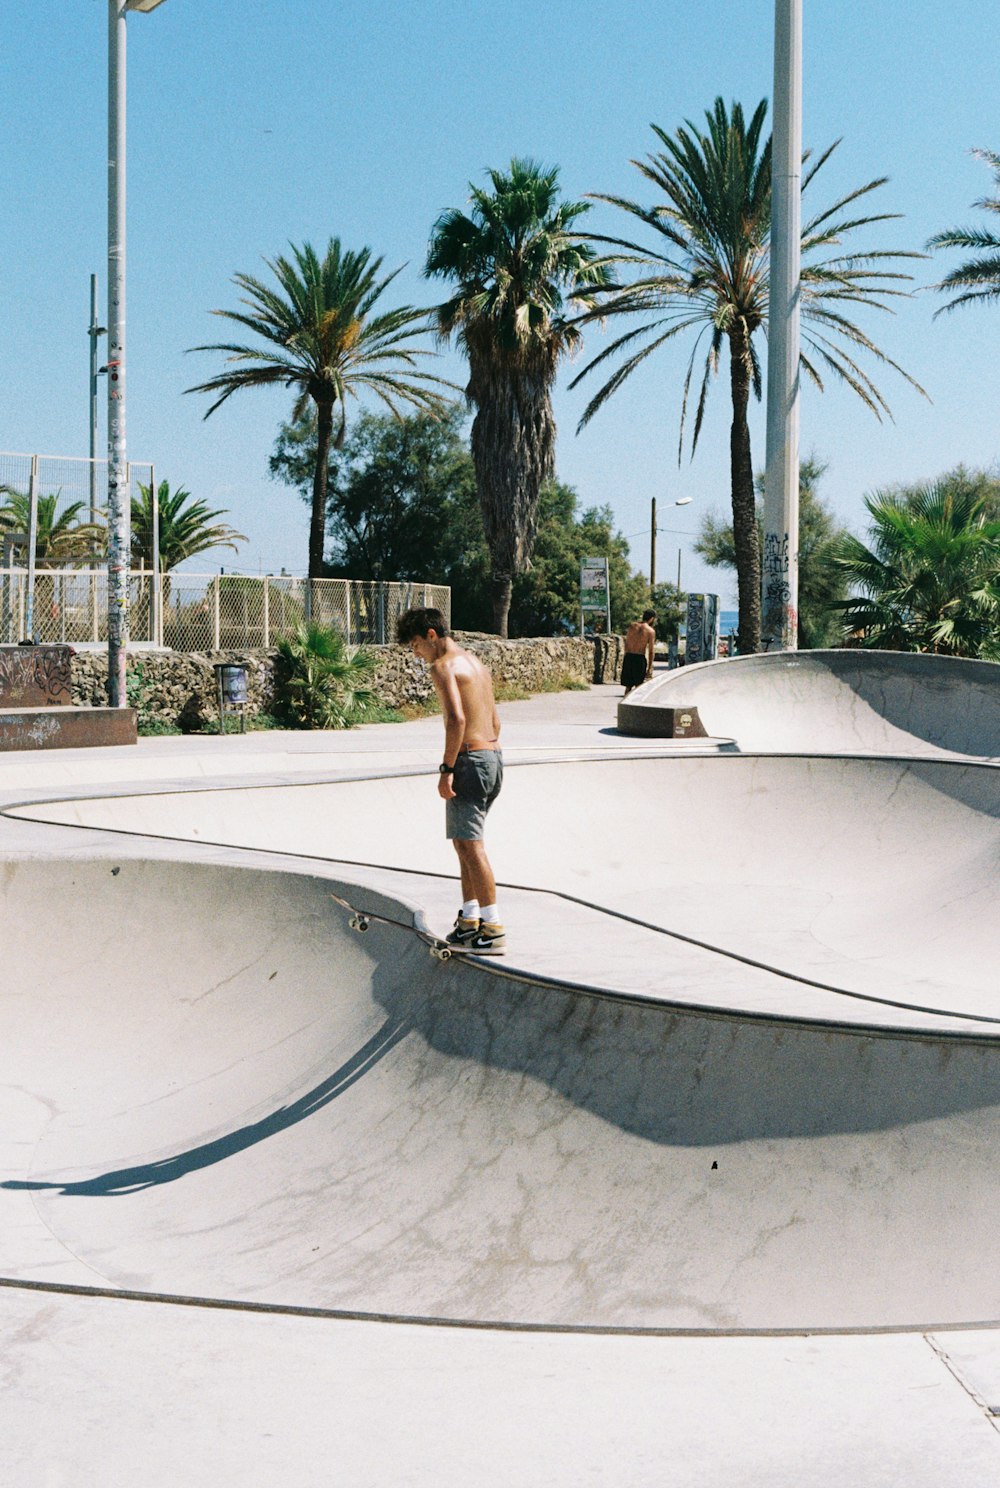 a man riding a skateboard at a skate park